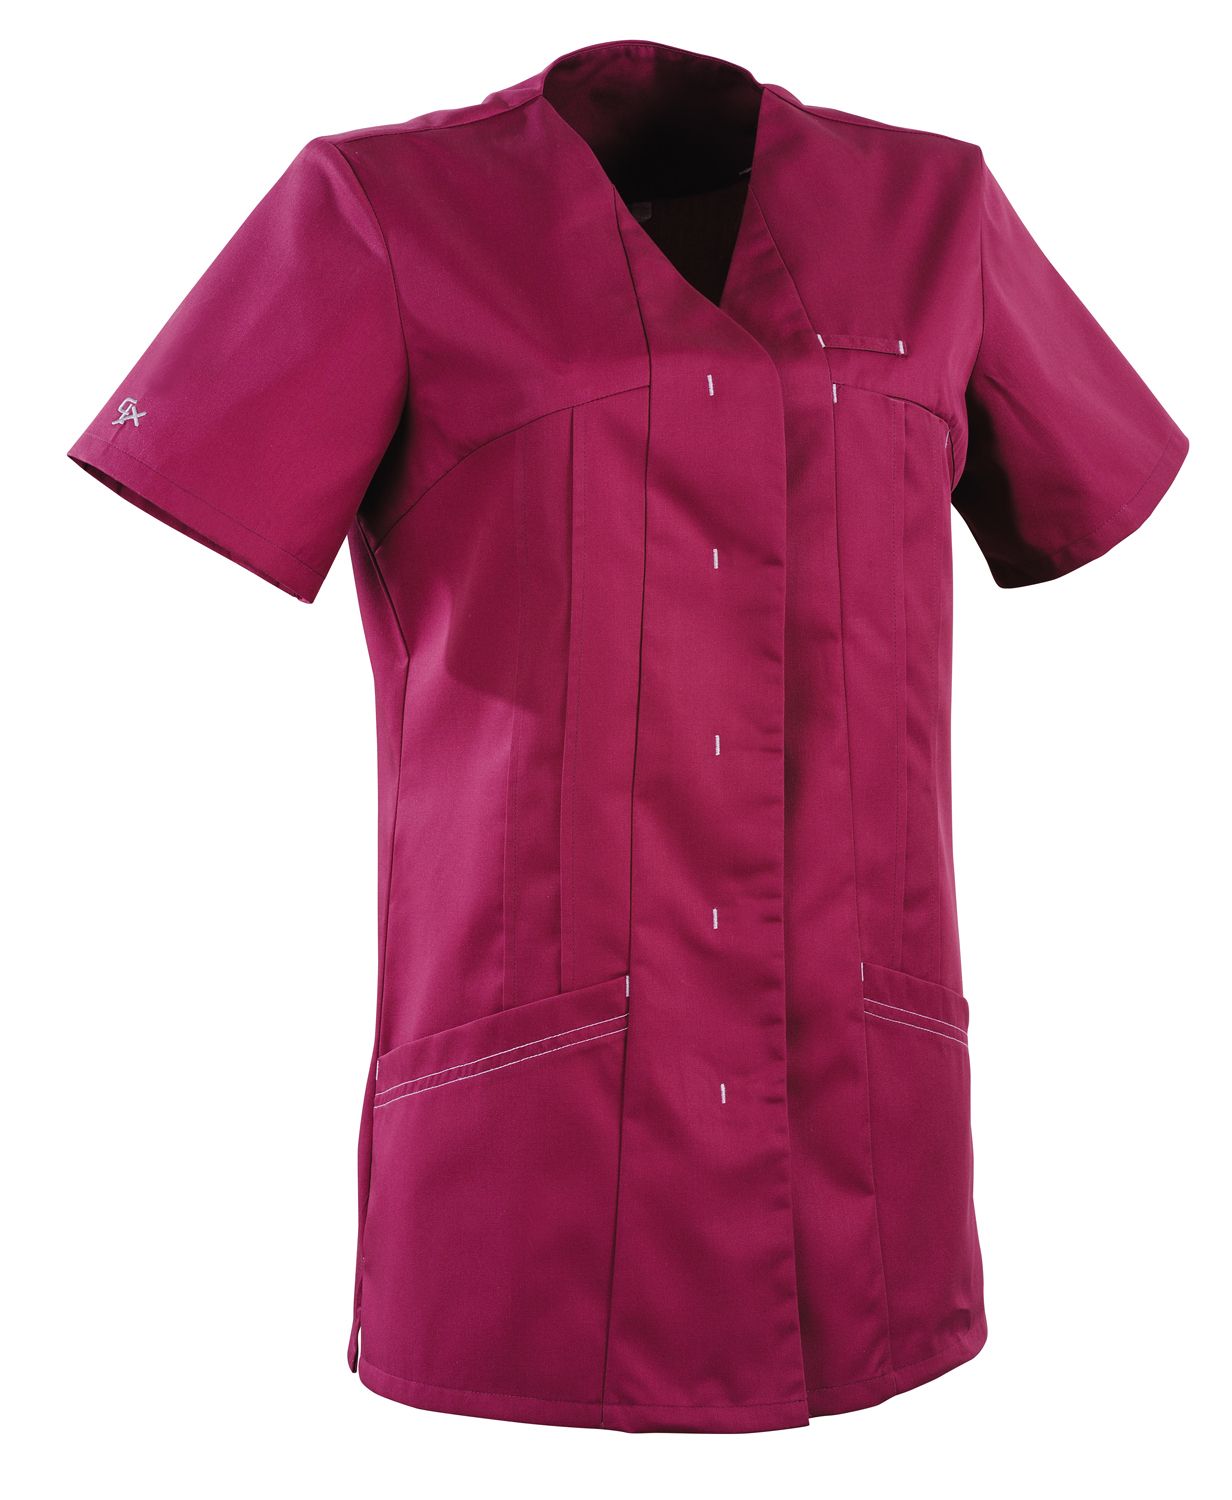 Women's pink medical tunic